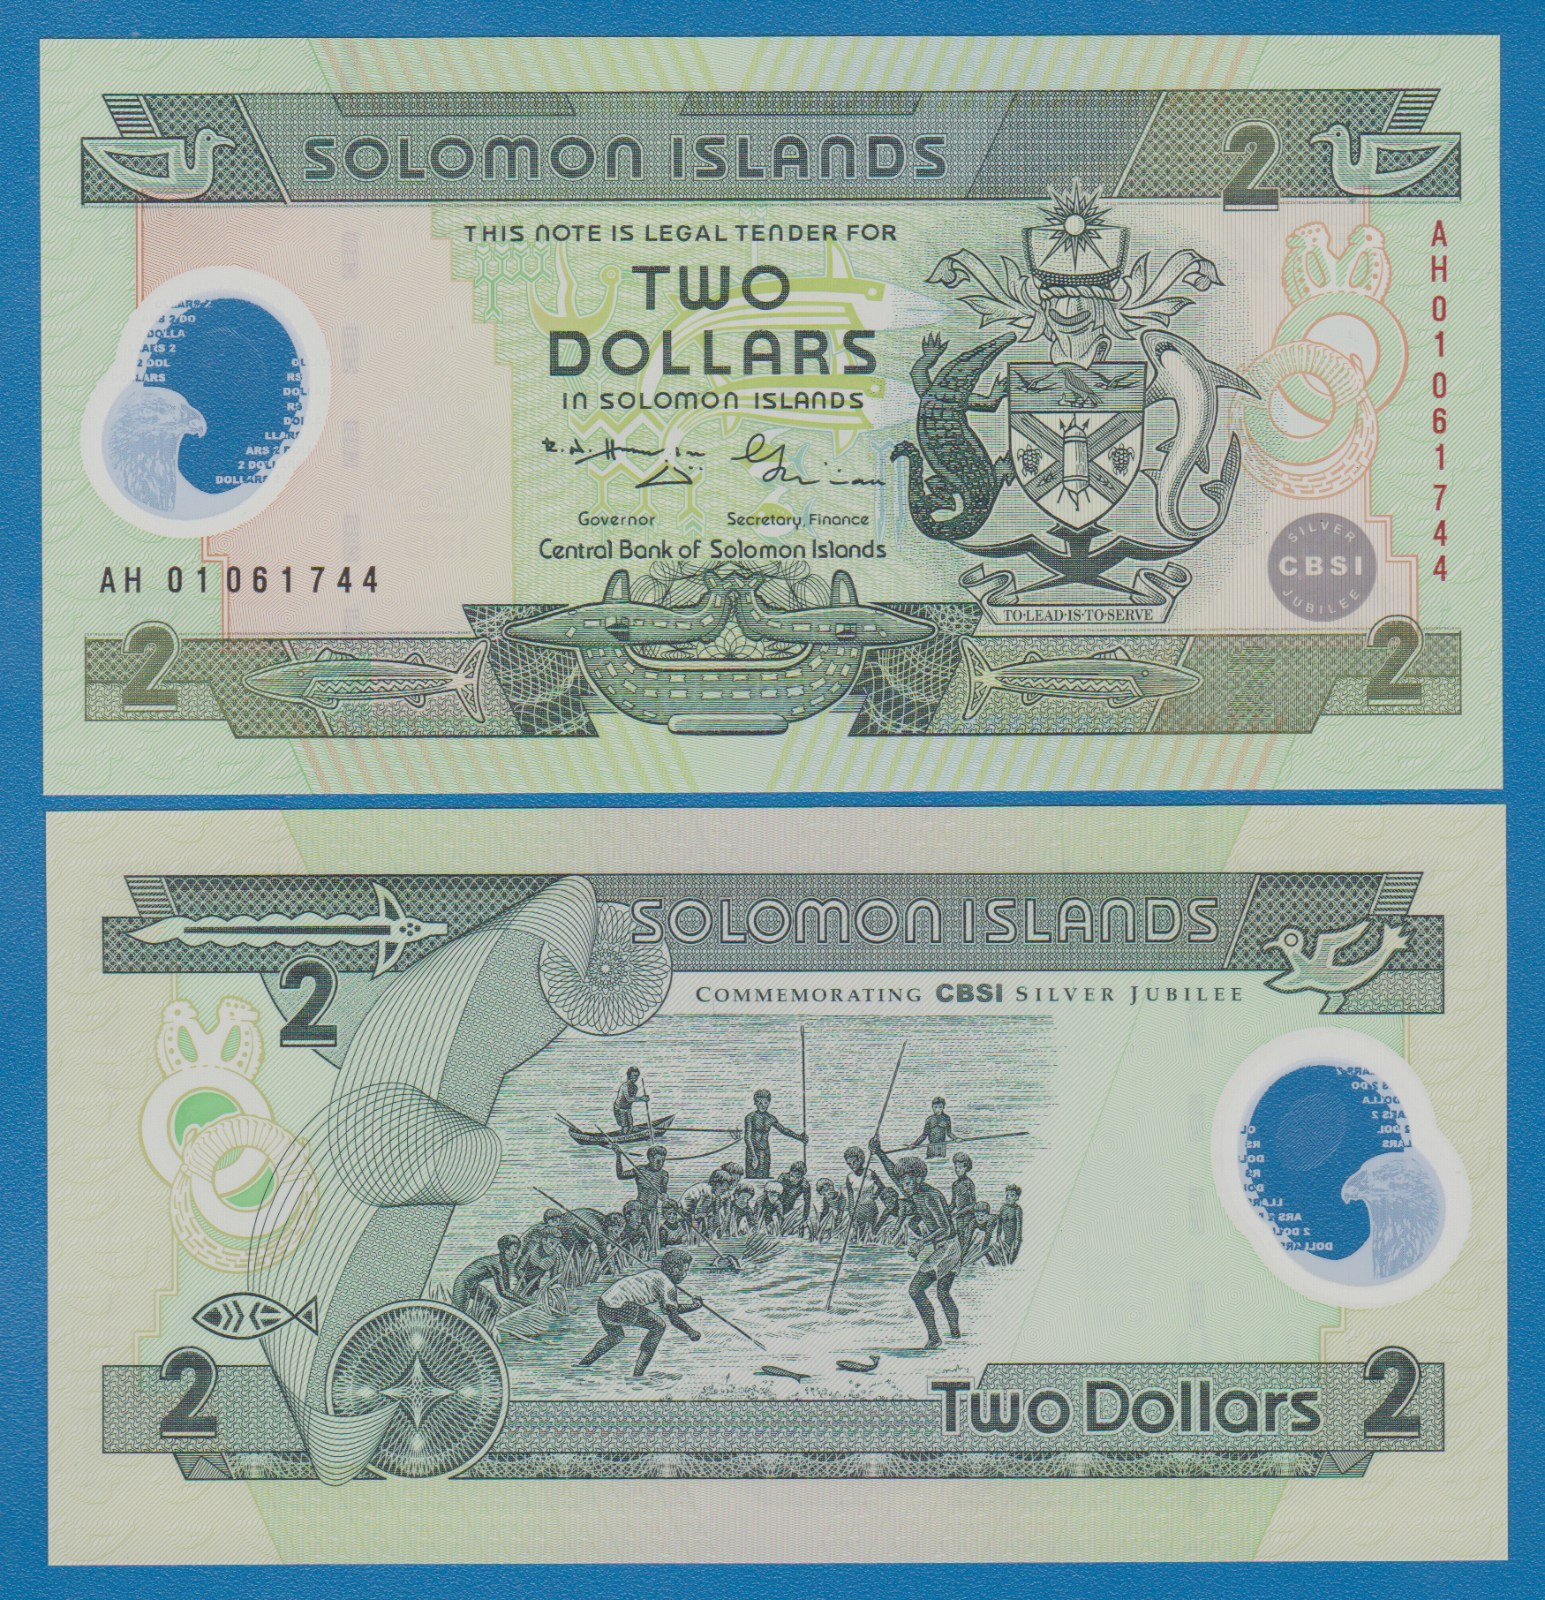 Solomon Islands 2 Dollars P 23 Polymer Commemorative Unc Low Shipping! Combine!